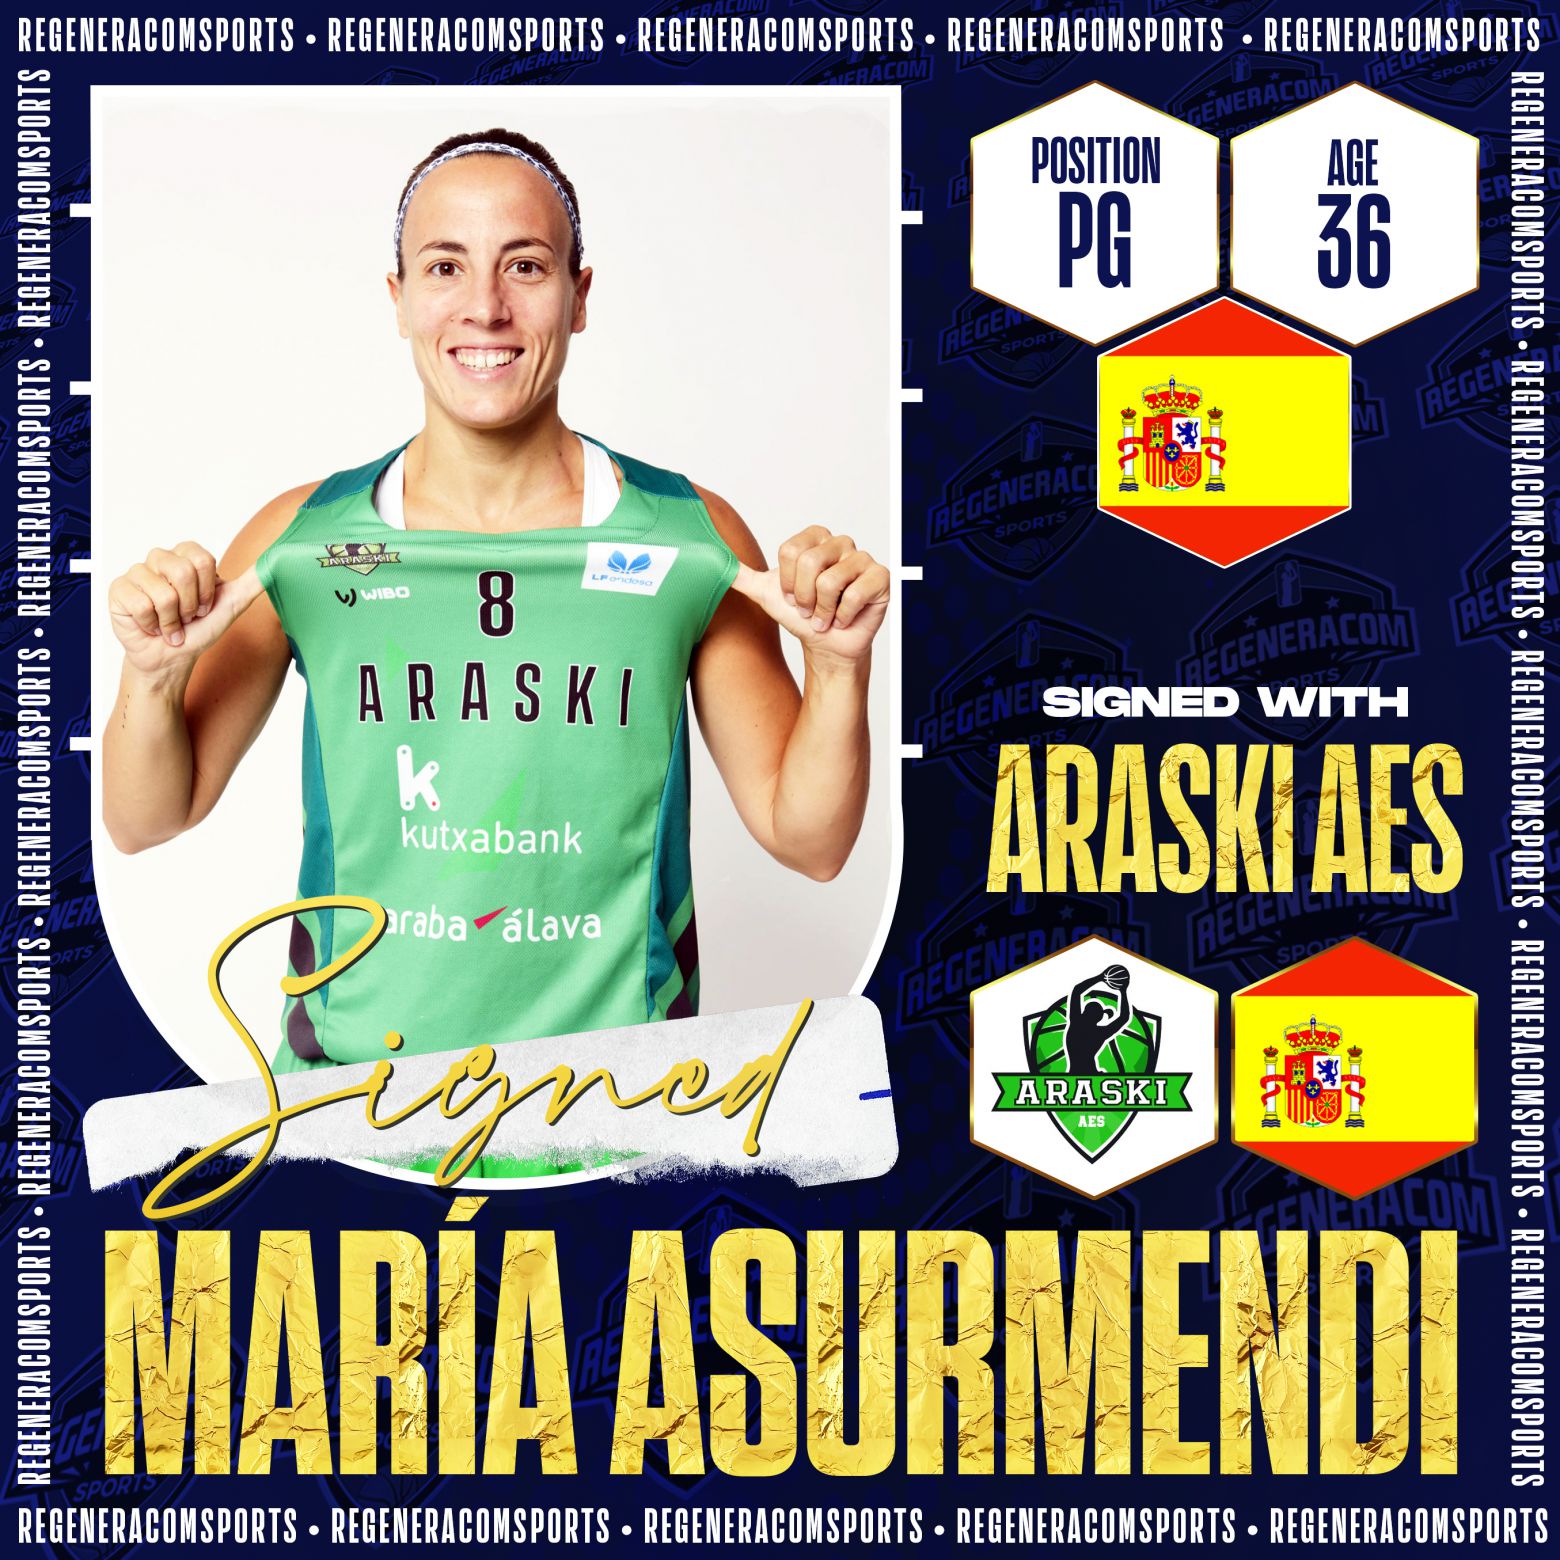 MARÍA ASURMENDI has re-signed with Araski for the 2022/23 season